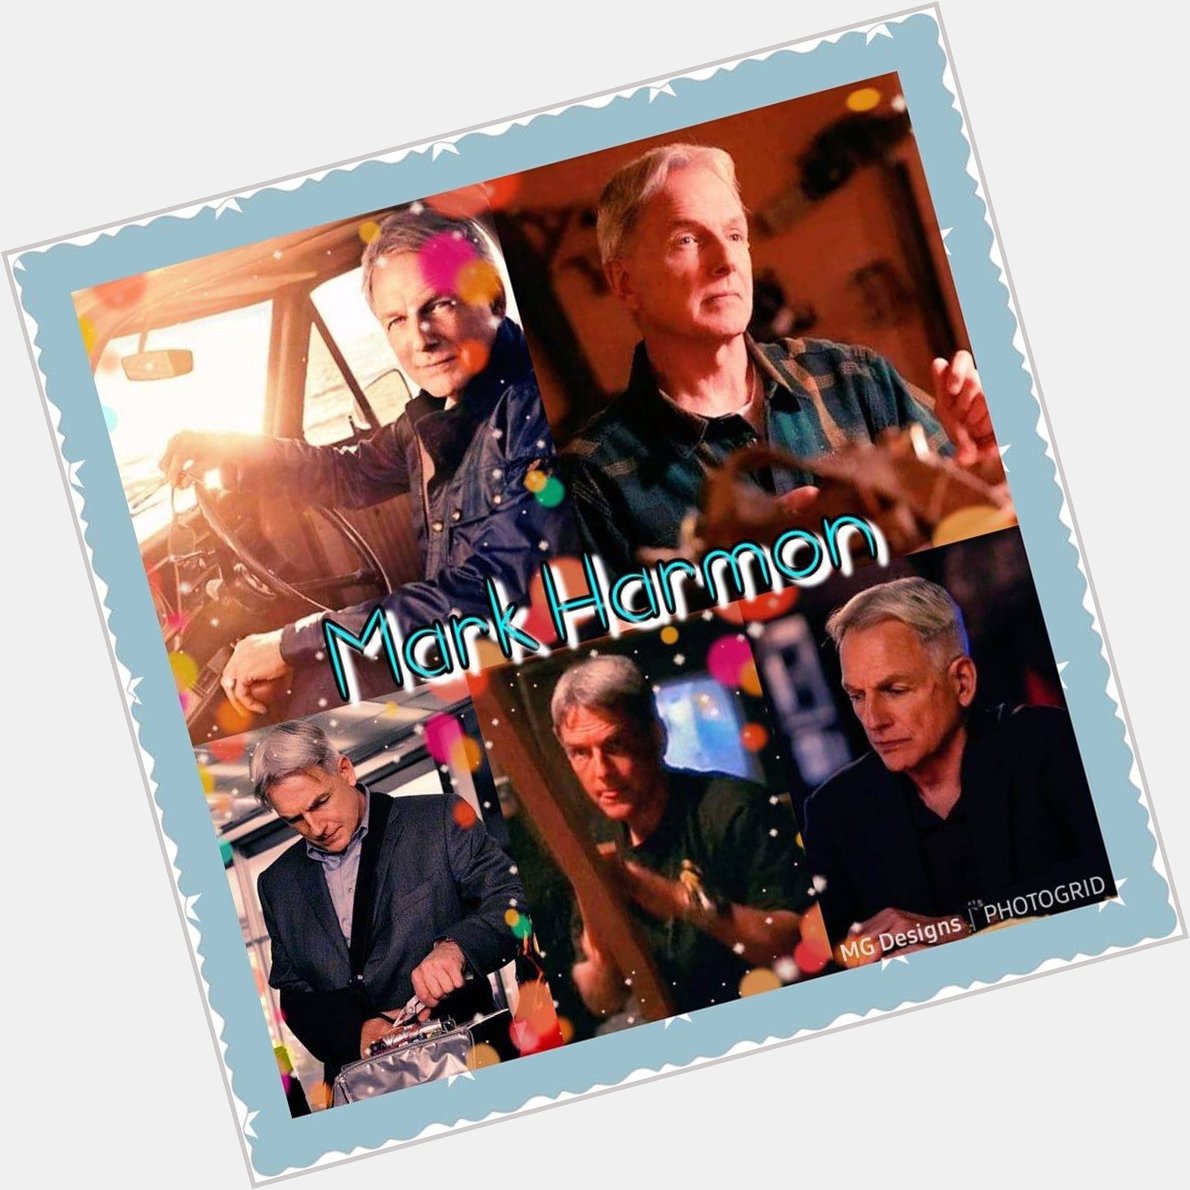 Happy birthday Mark Harmon
Mark Harmon NCIS collage    